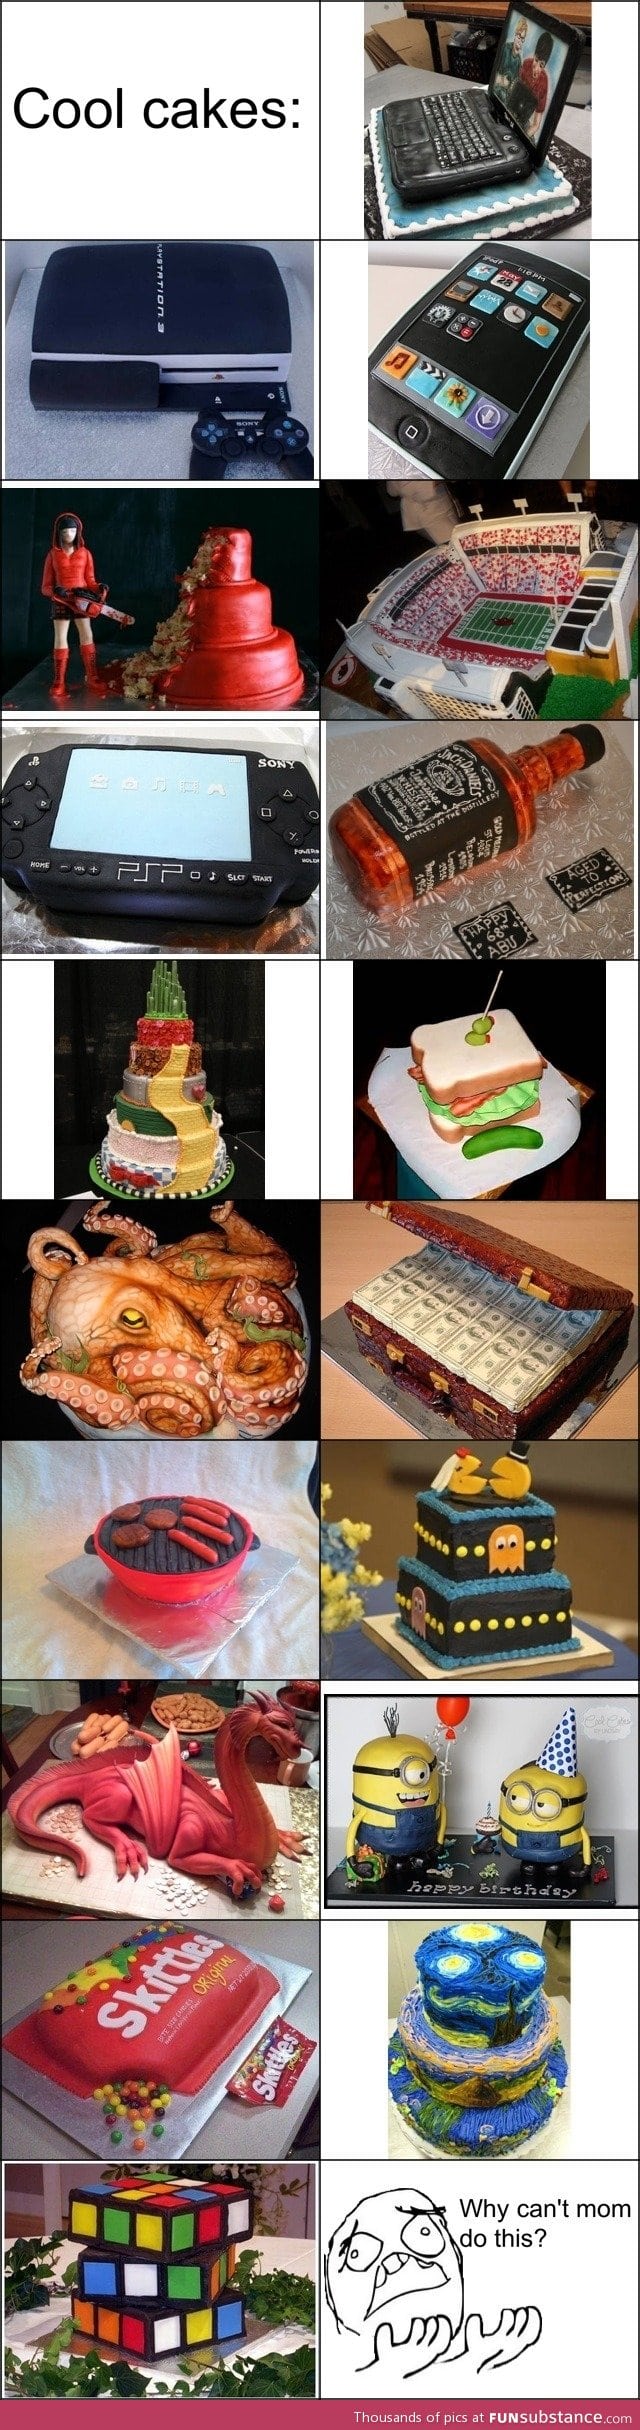 Epic cakes